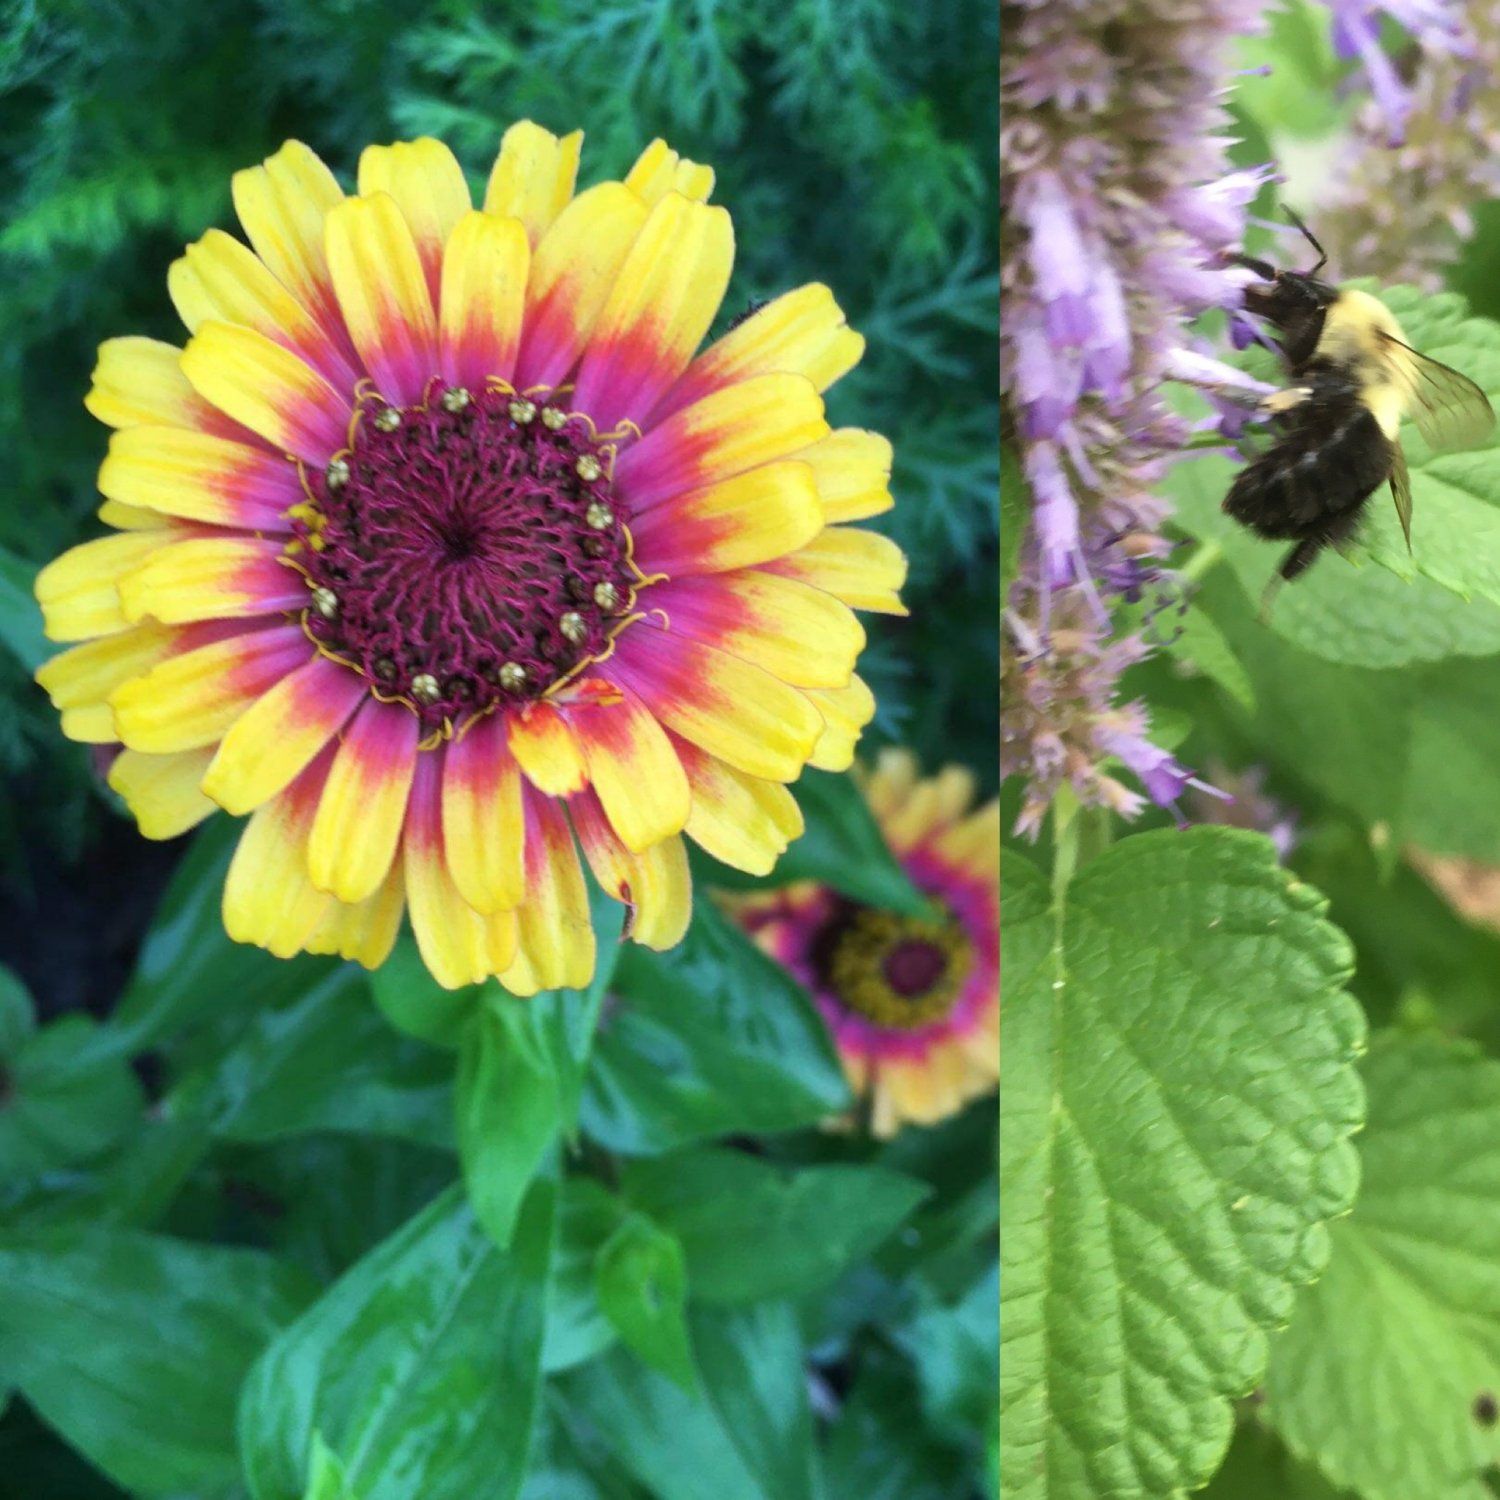 Previous Happening: Pollinator Haiku